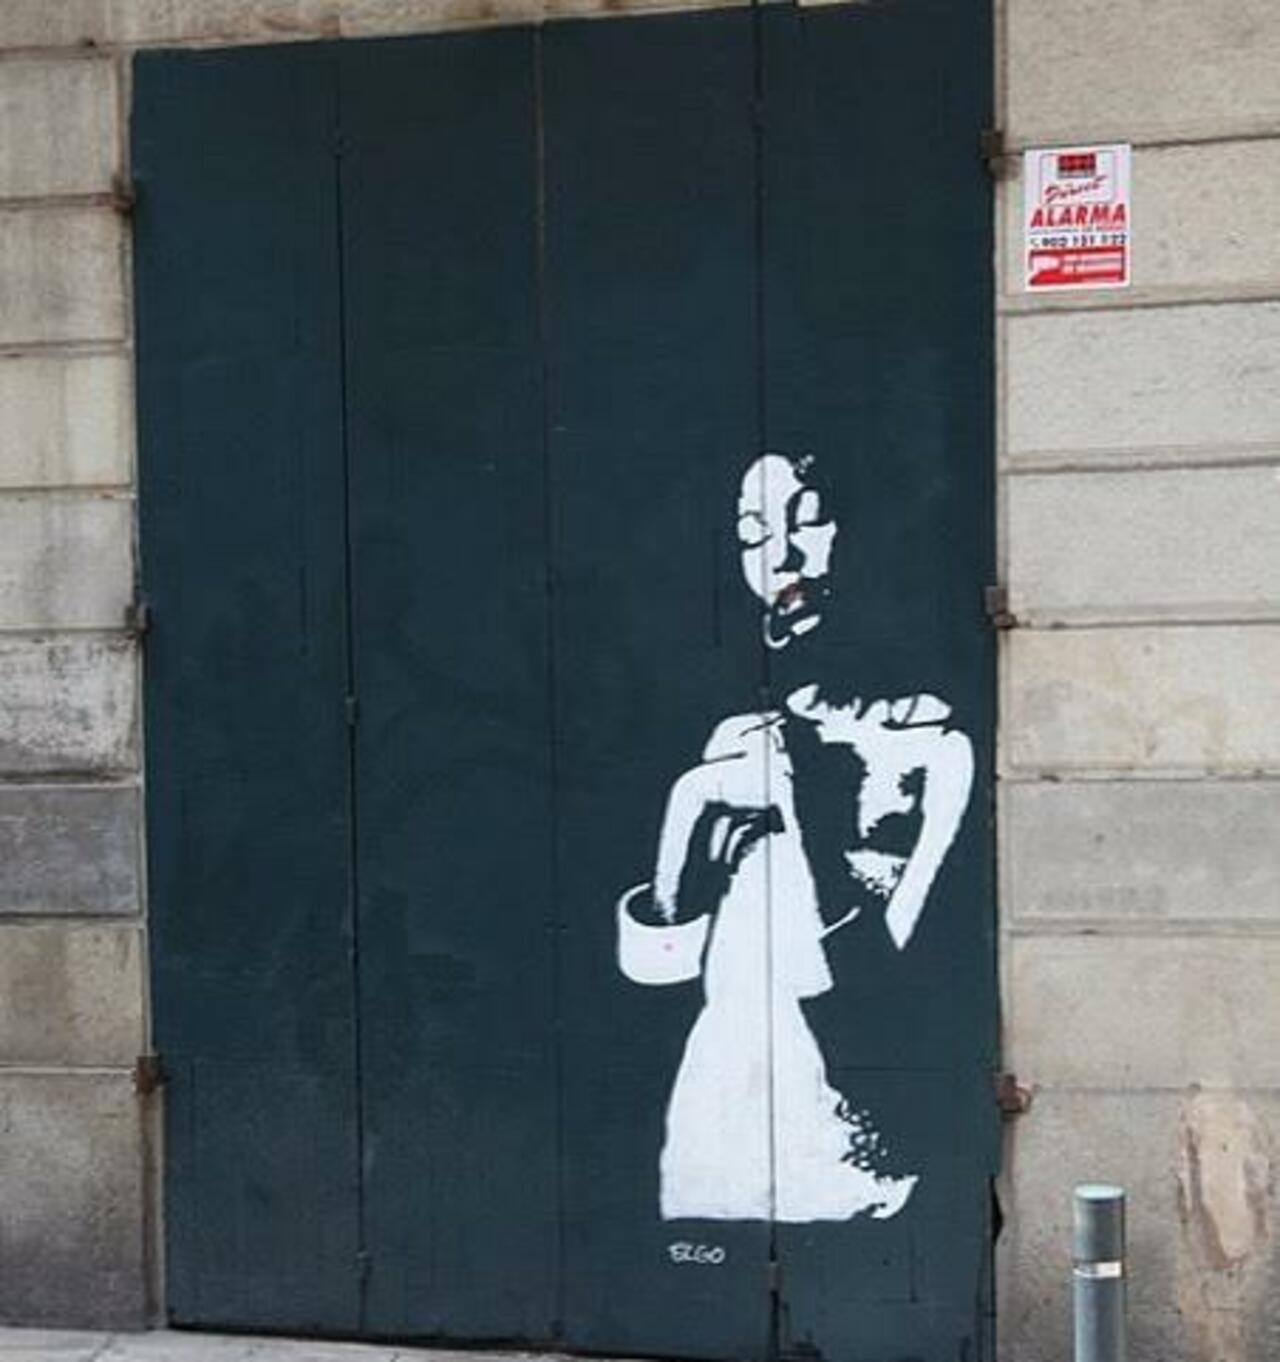 Black woman #street #streetart #streetartbarcelona #graff #graffiti #wallart #sprayart #urban #urbain #art #artist … http://t.co/xKHbntsrCi